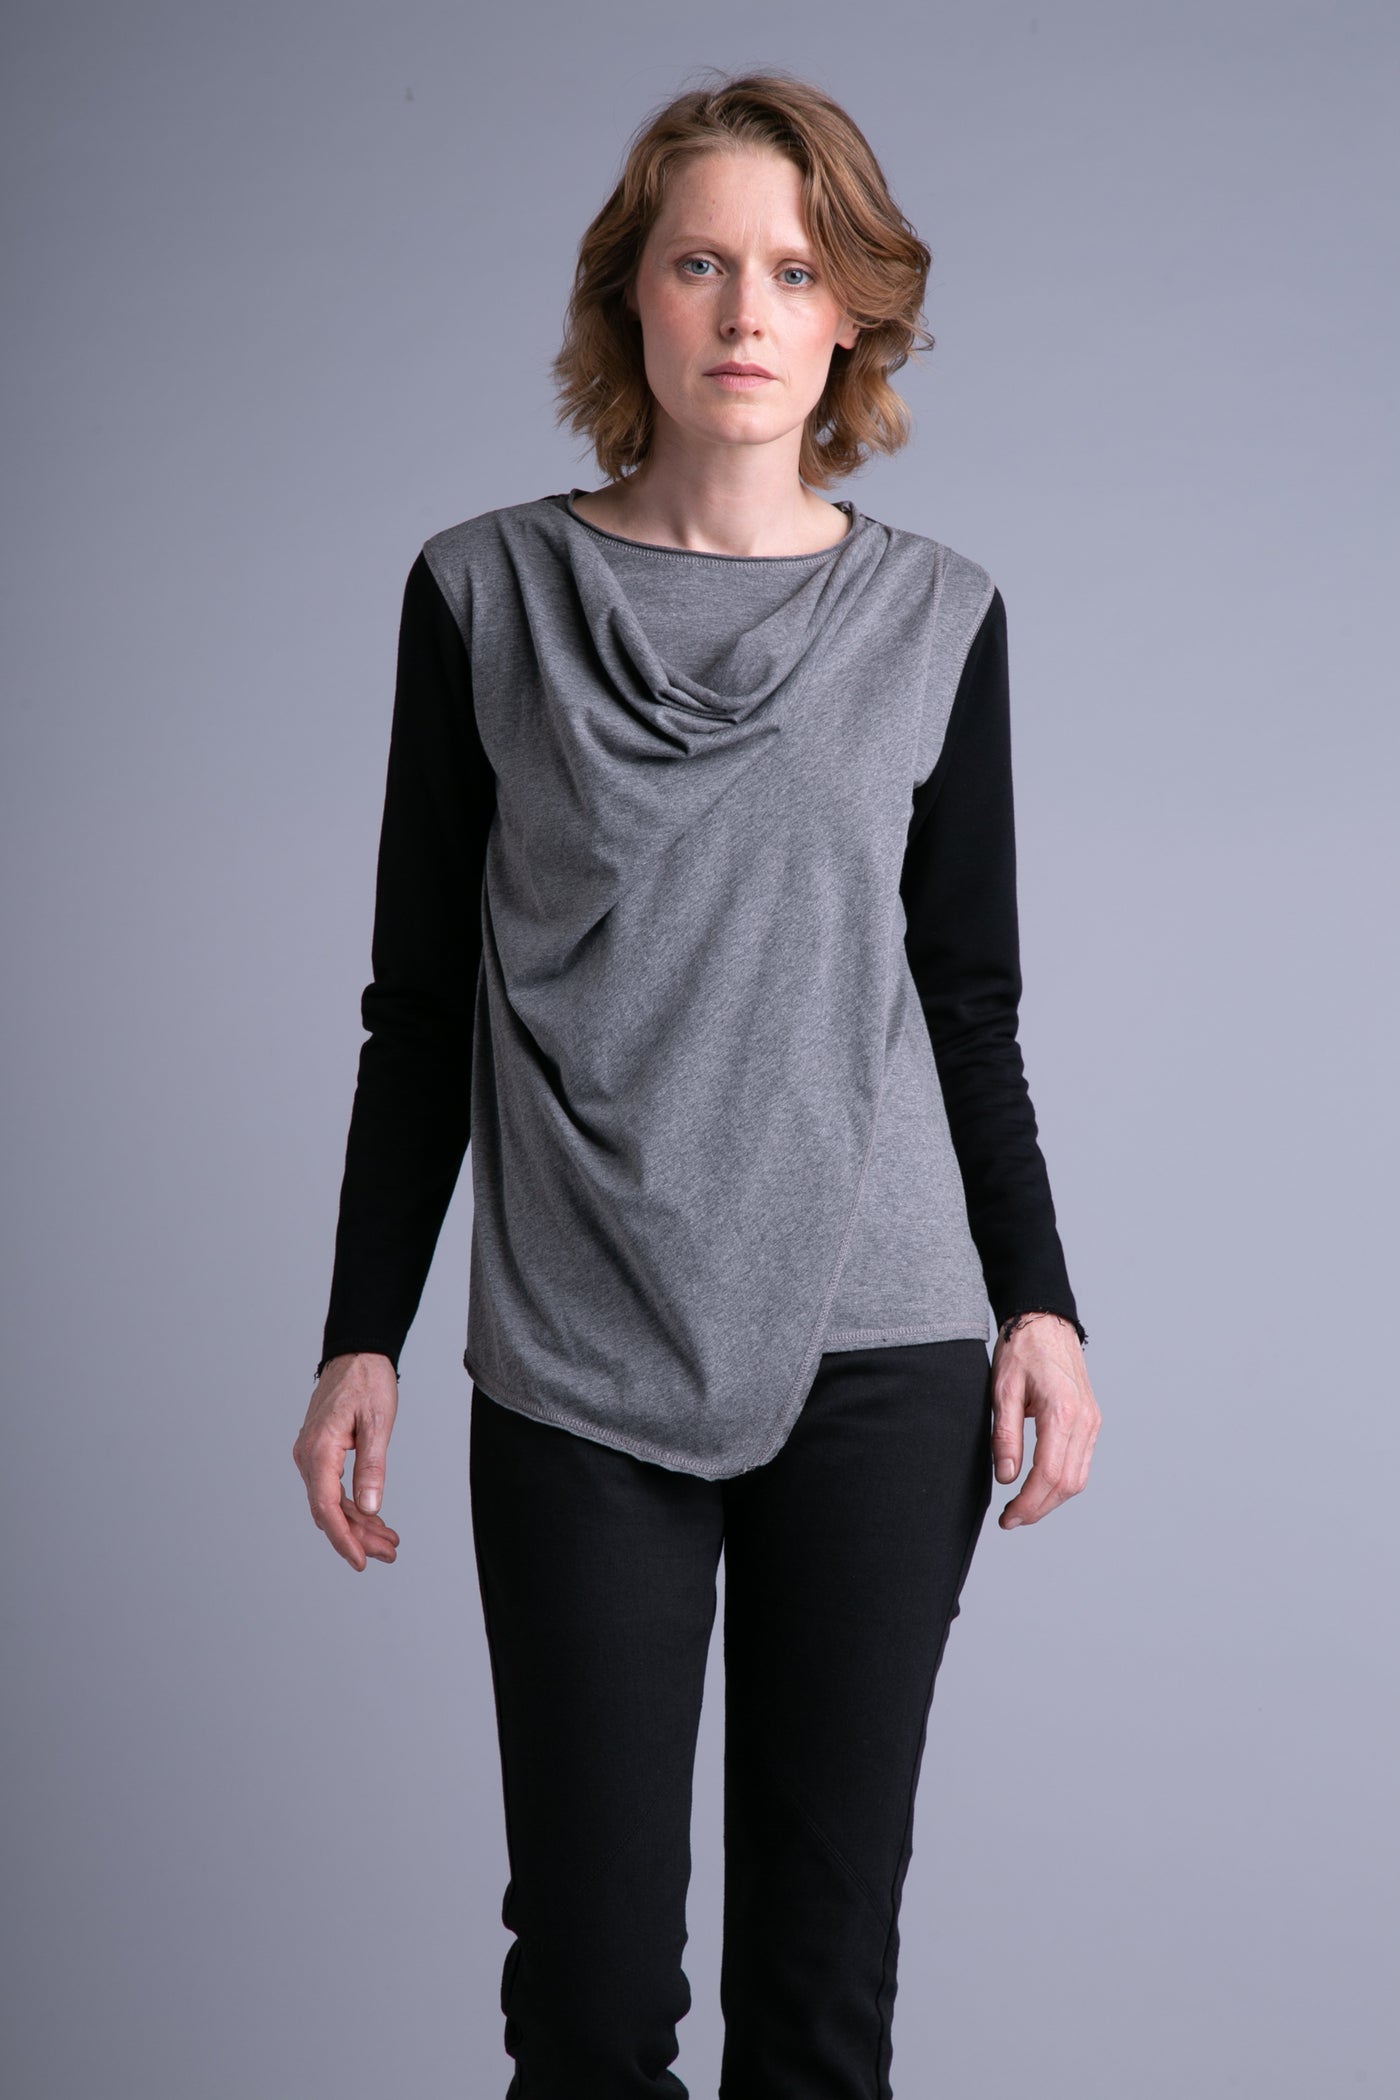 Draped shirt for women, long sleeves | Black, grey